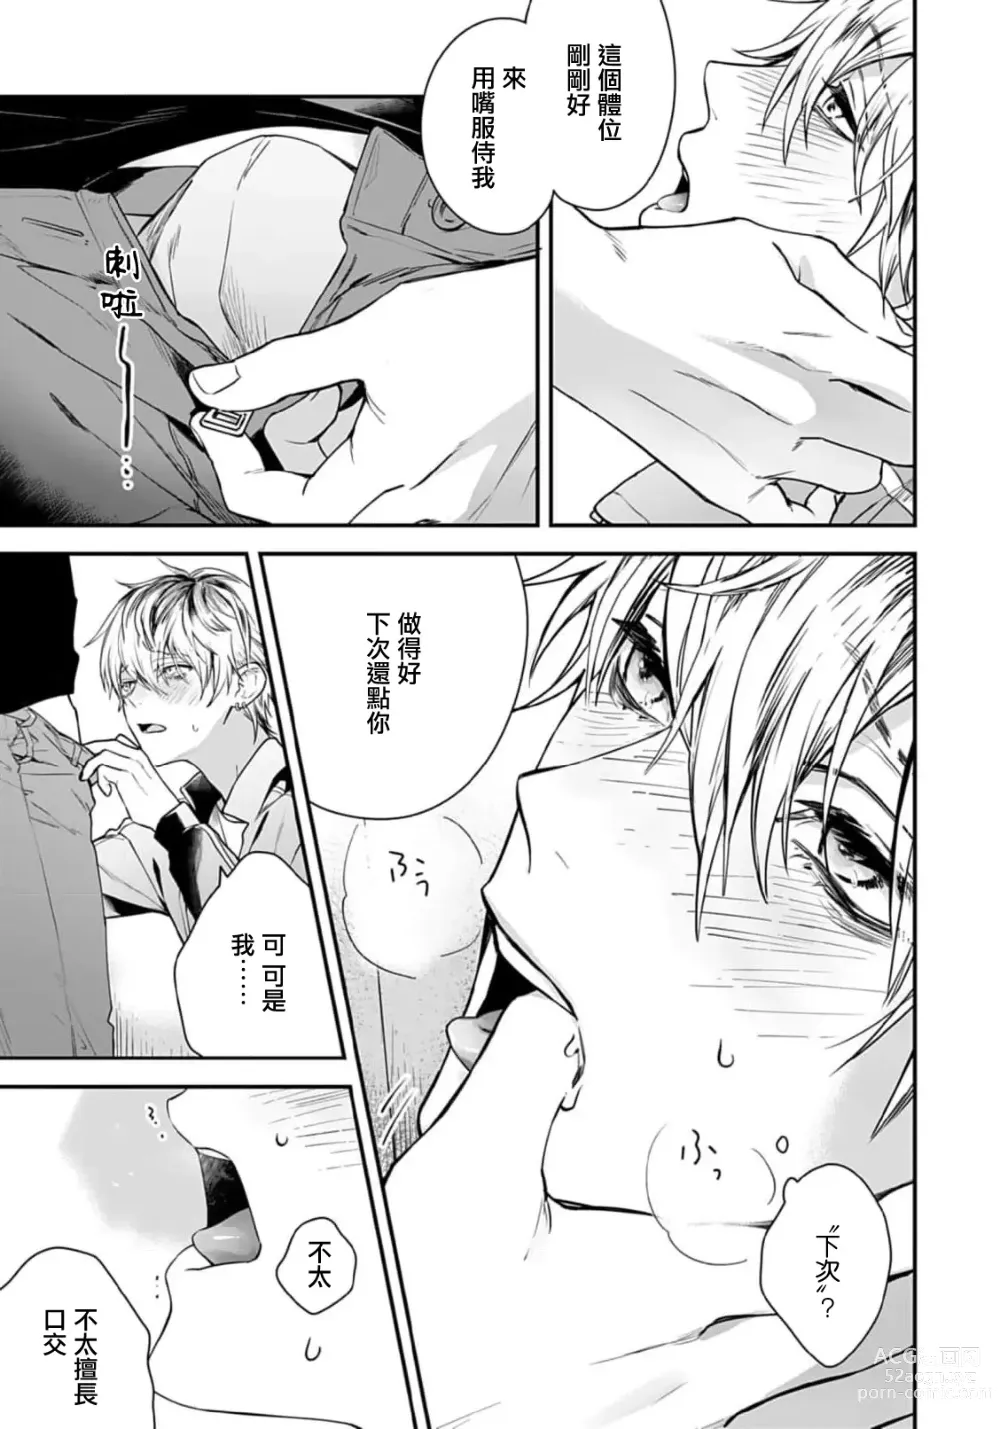 Page 17 of manga 他的声音在我听来完全就是爱之歌 1-3